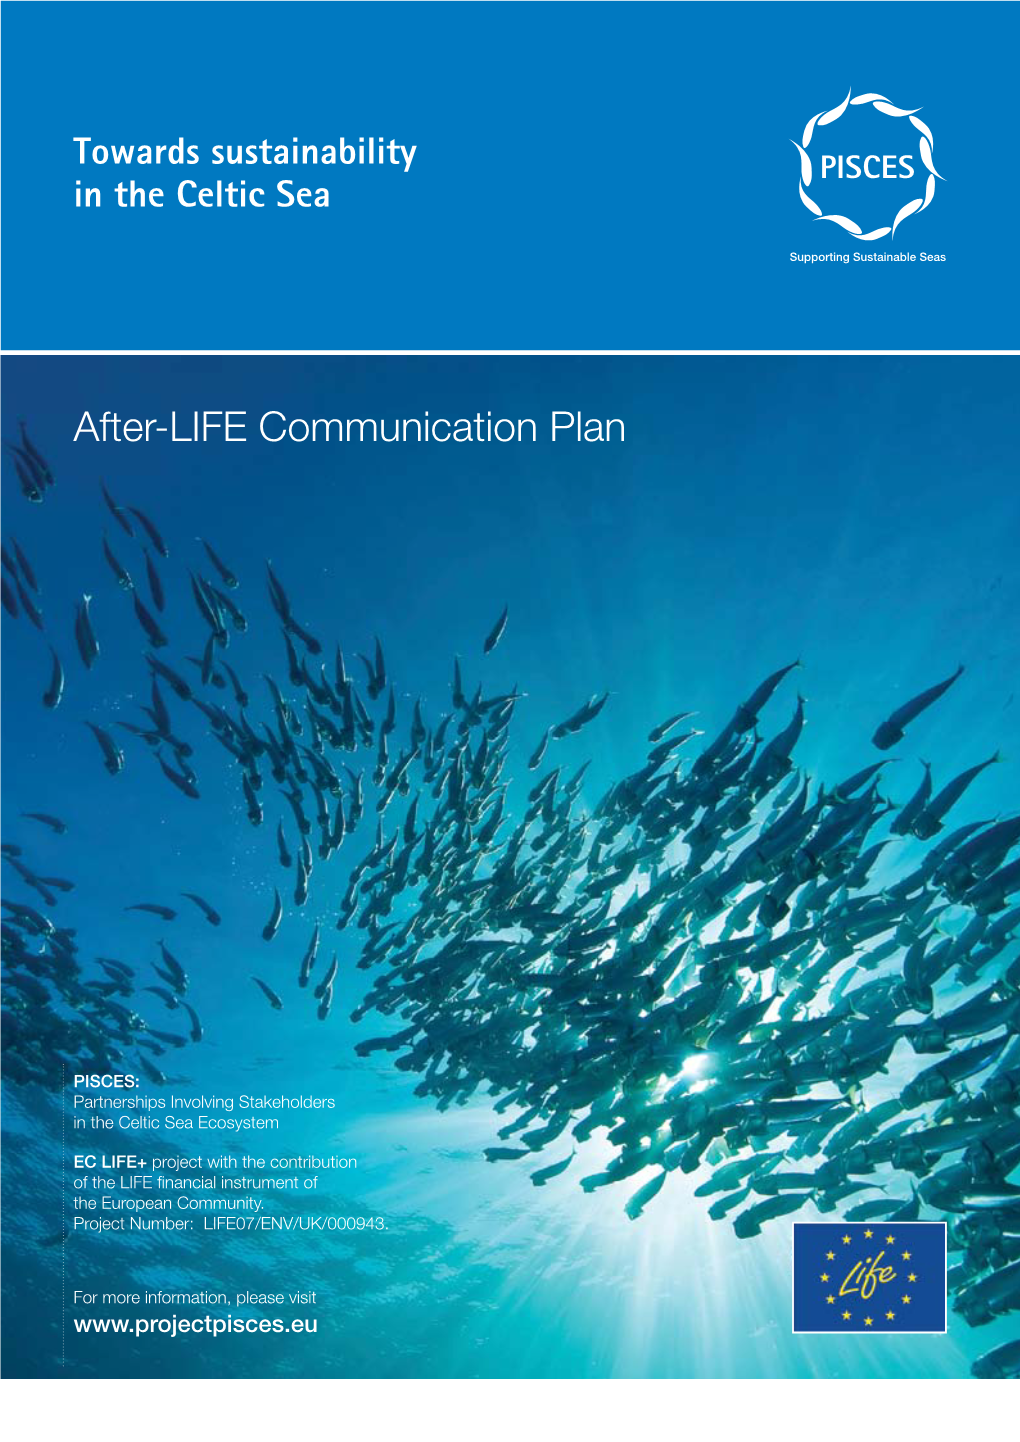 After-LIFE Communication Plan